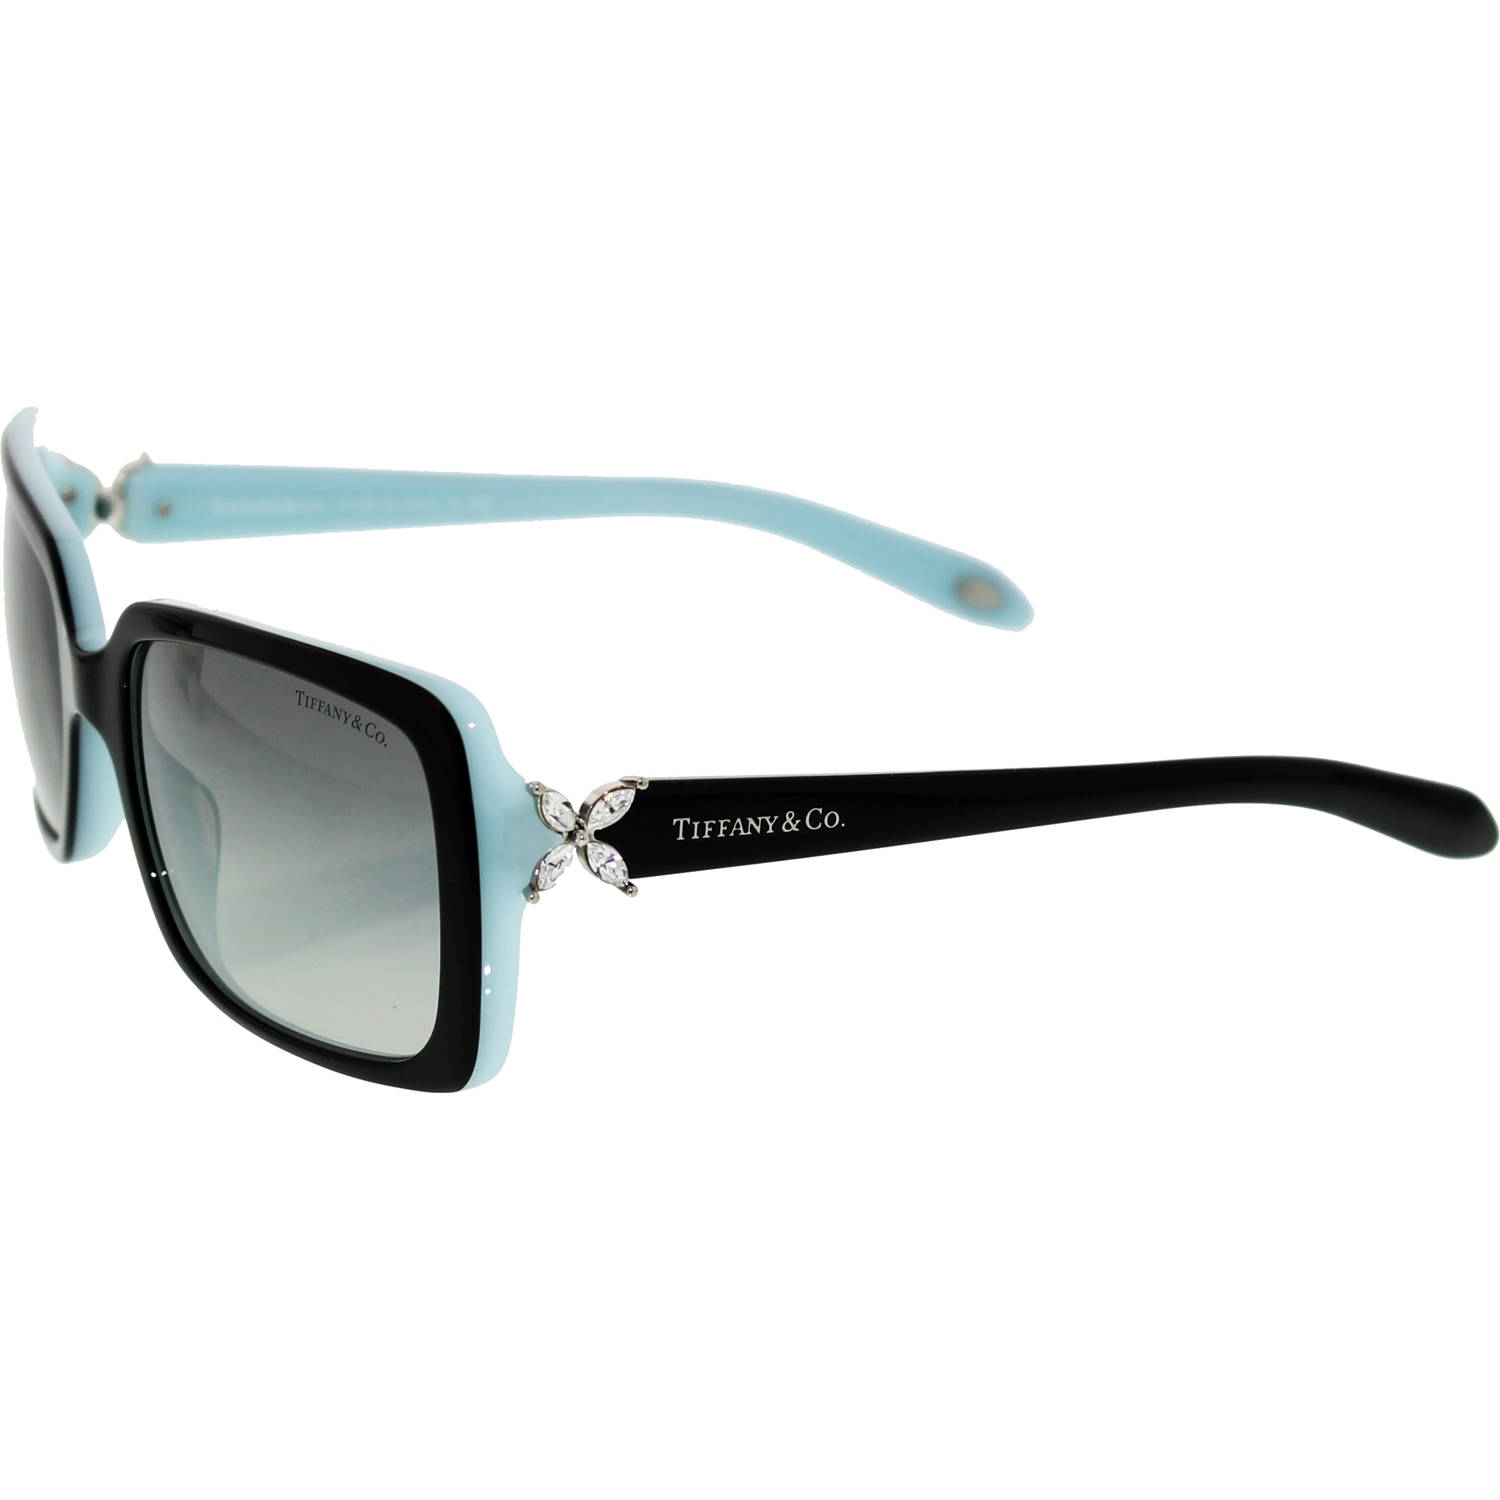 Tiffany&Co. Rectangular Sunglasses Victoria Tf 4047b - 80553c Wallpaper